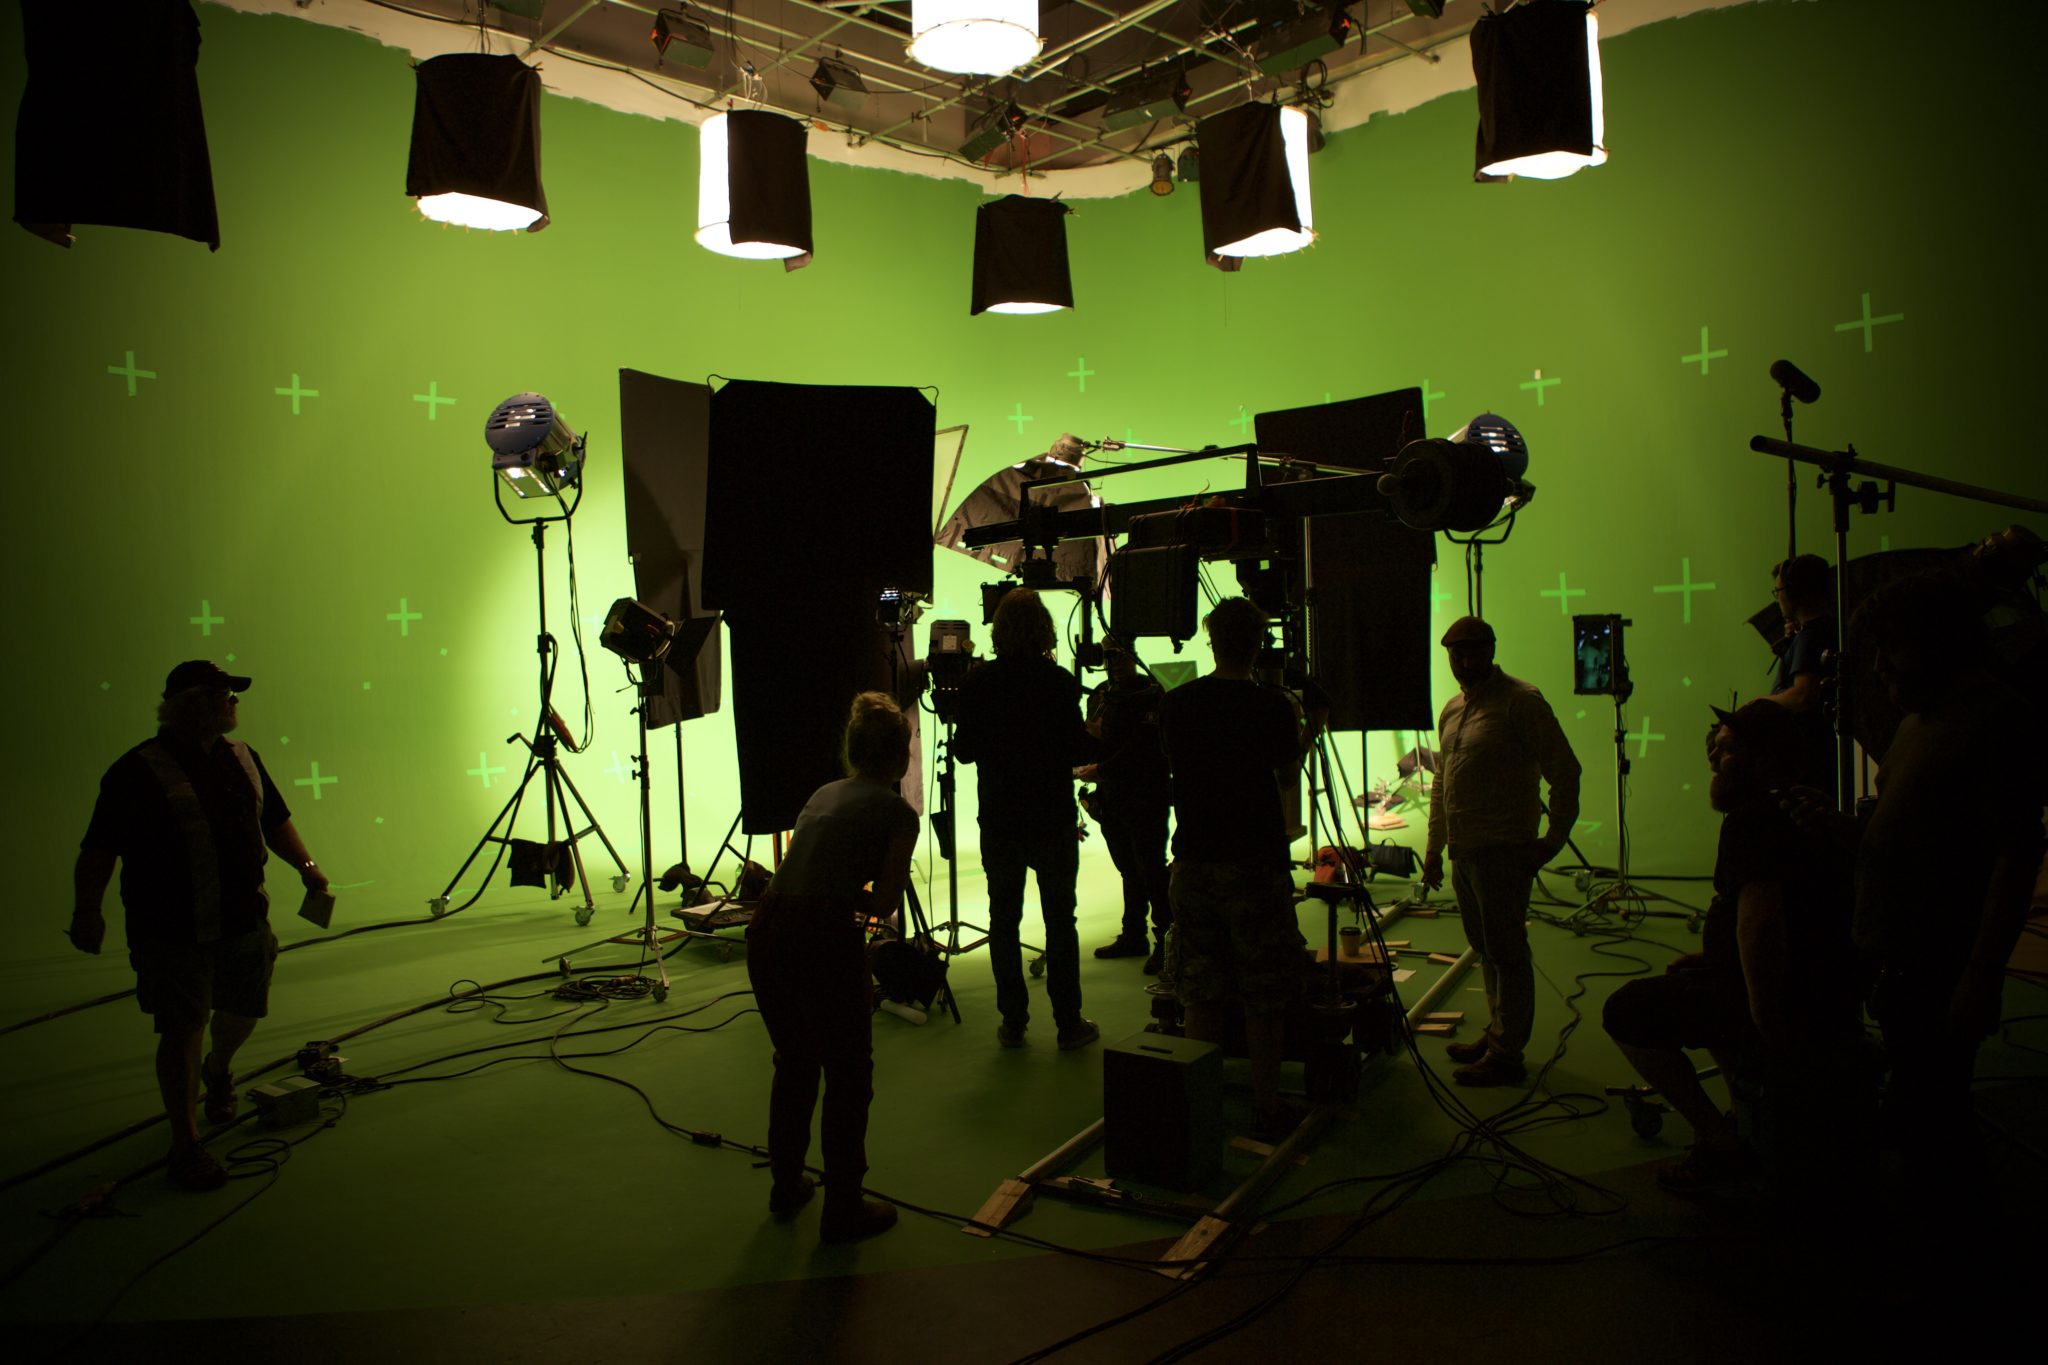 Shooting on a green screen set